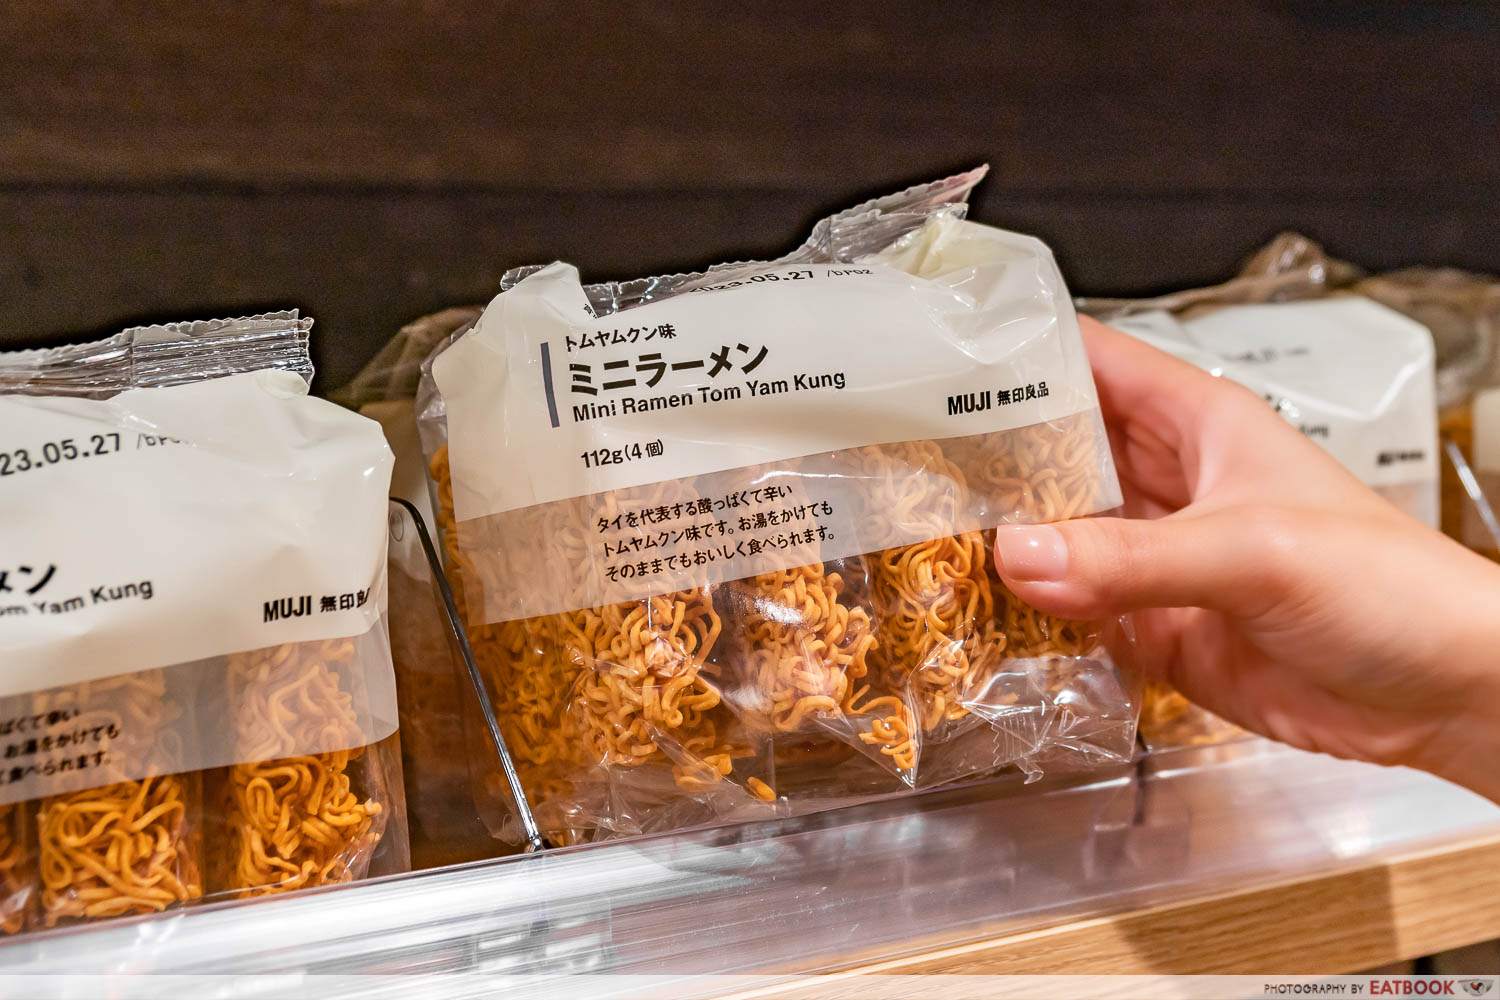 muji snacks - noodles